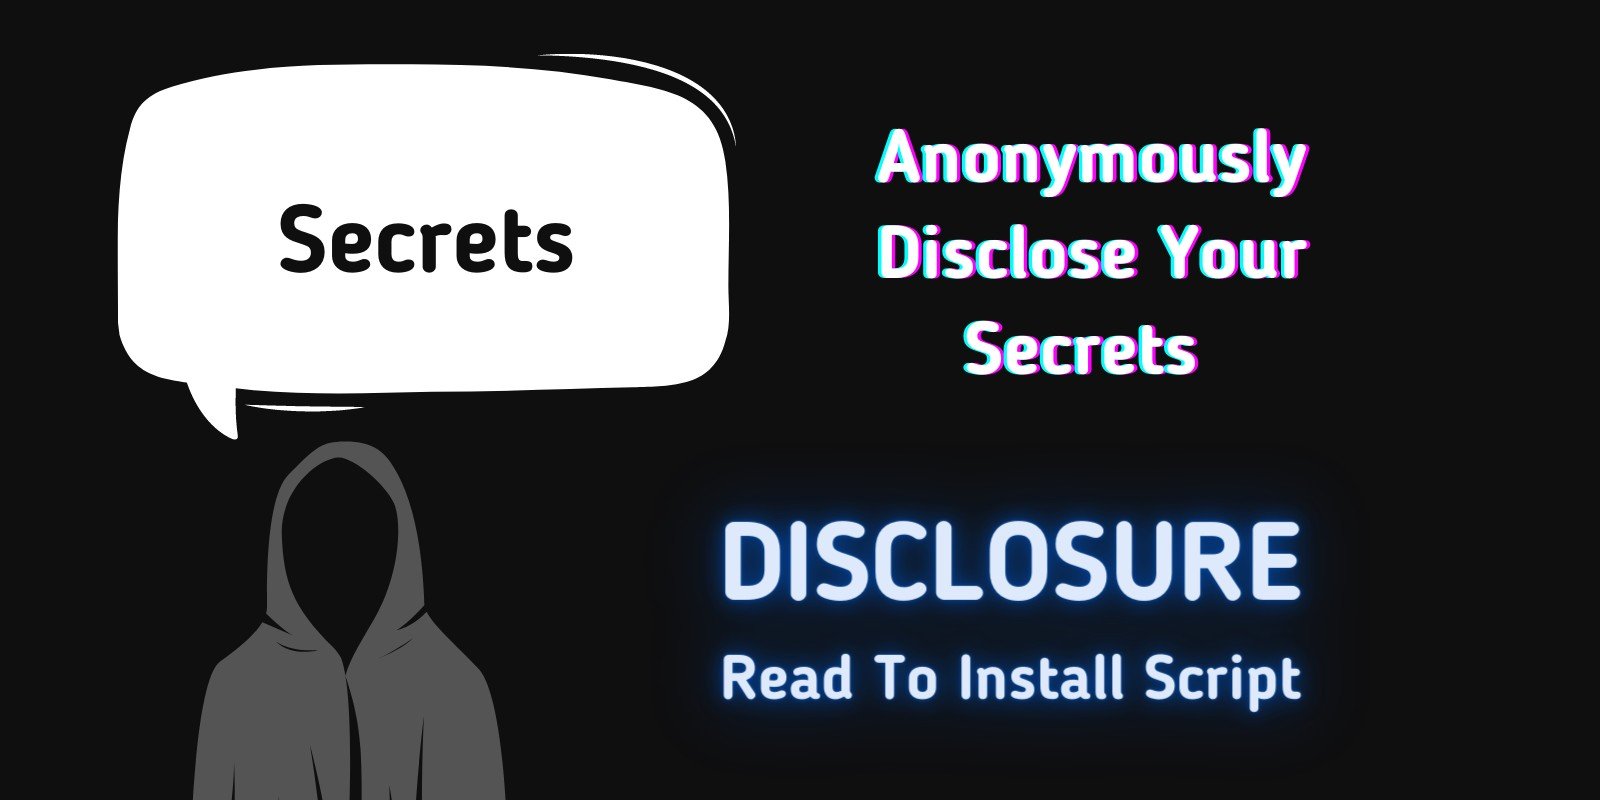 Disclosure - Anonymous Secret Sharing Website